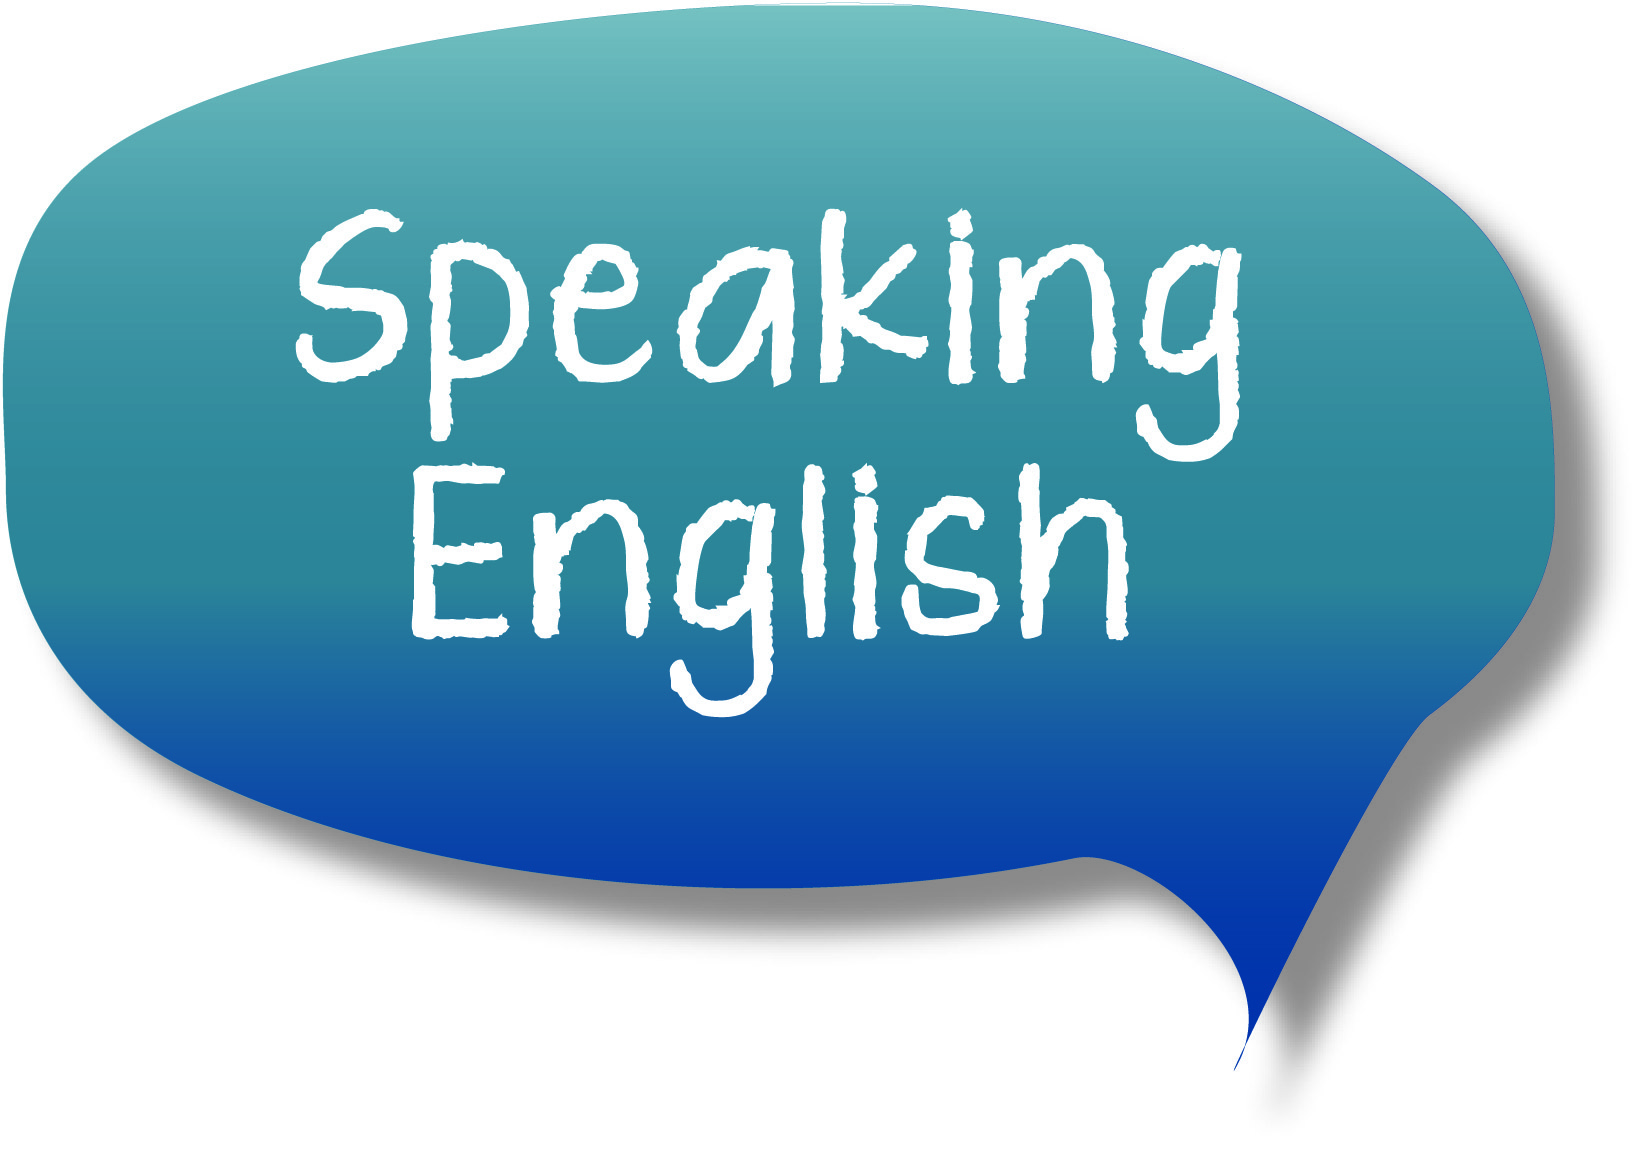 Do you speak English? - THE PANAMA PERSPECTIVE